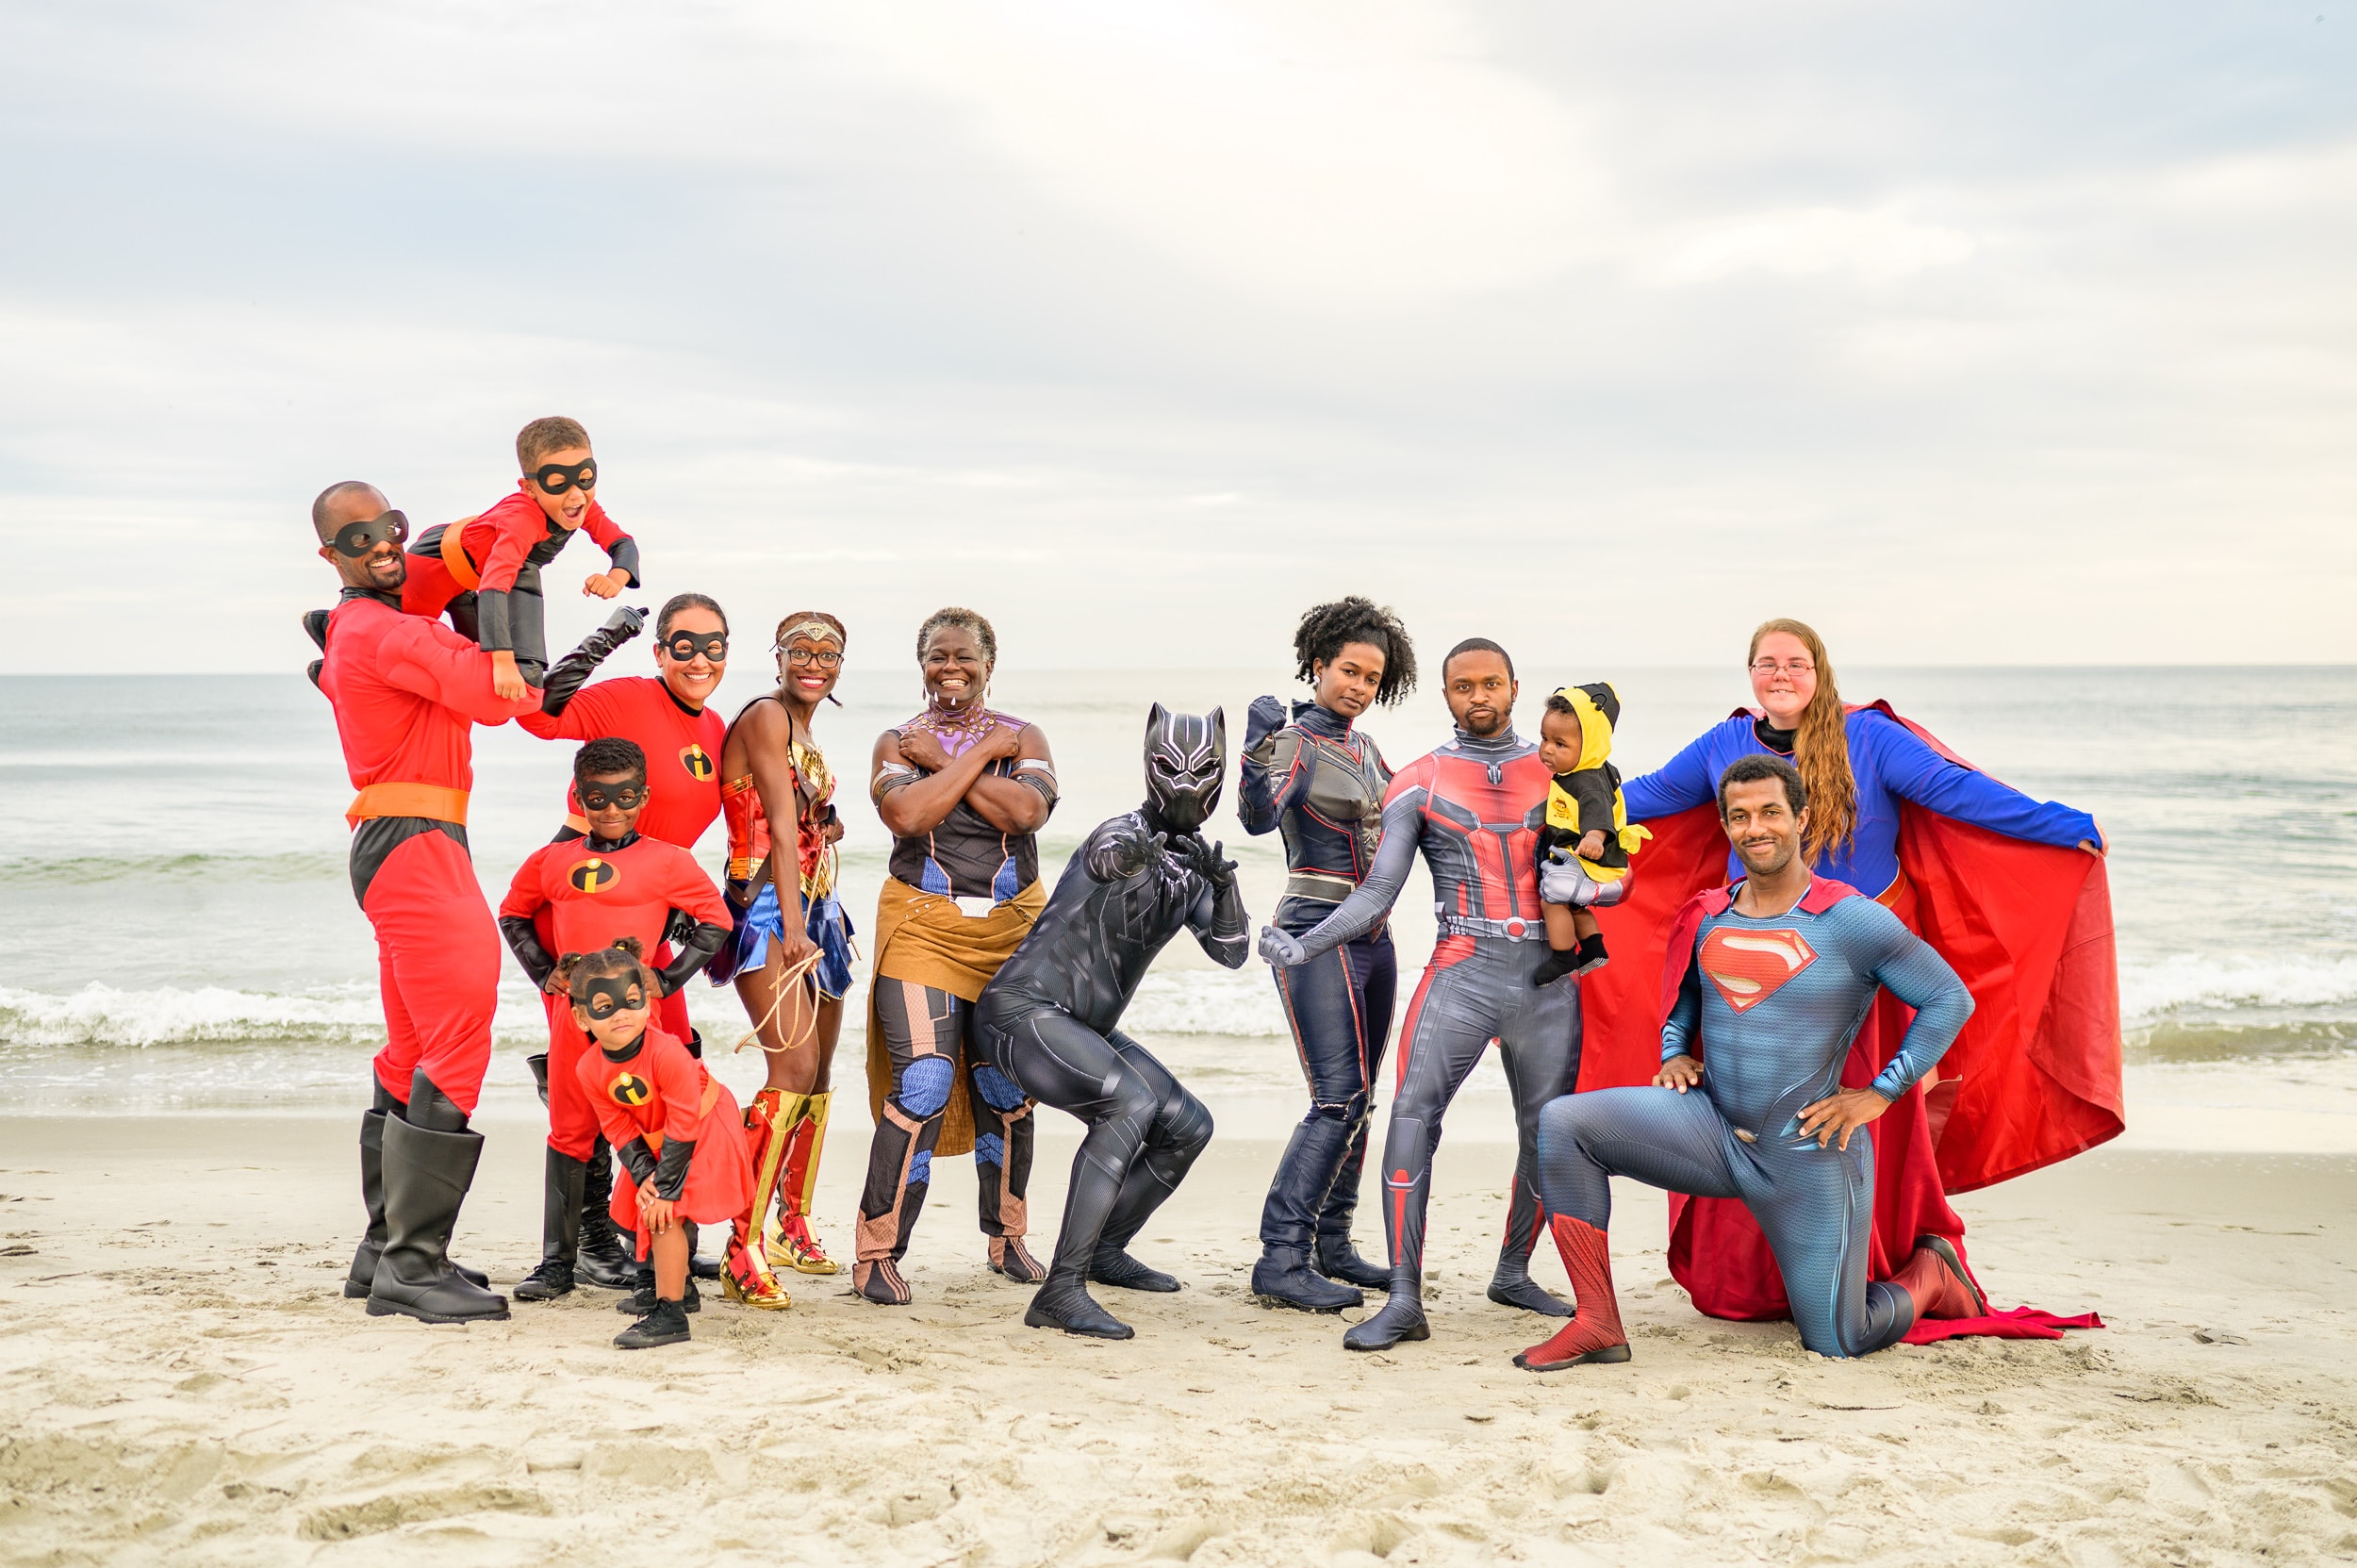 Superhero party - North Myrtle Beach